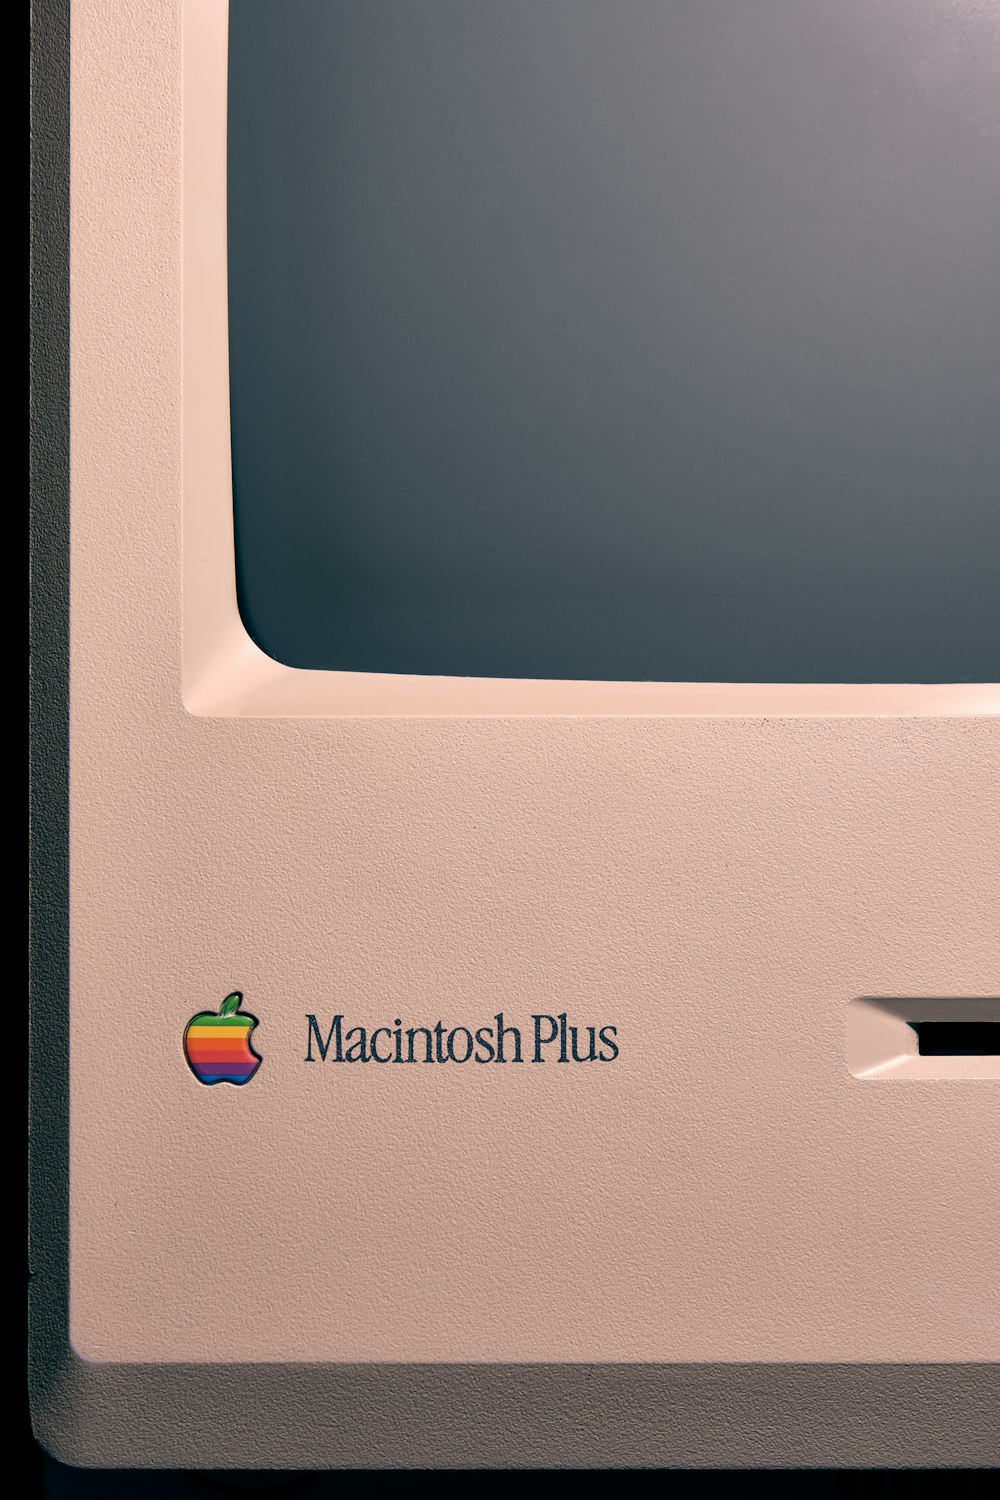 Macintosh Plus computer monitor